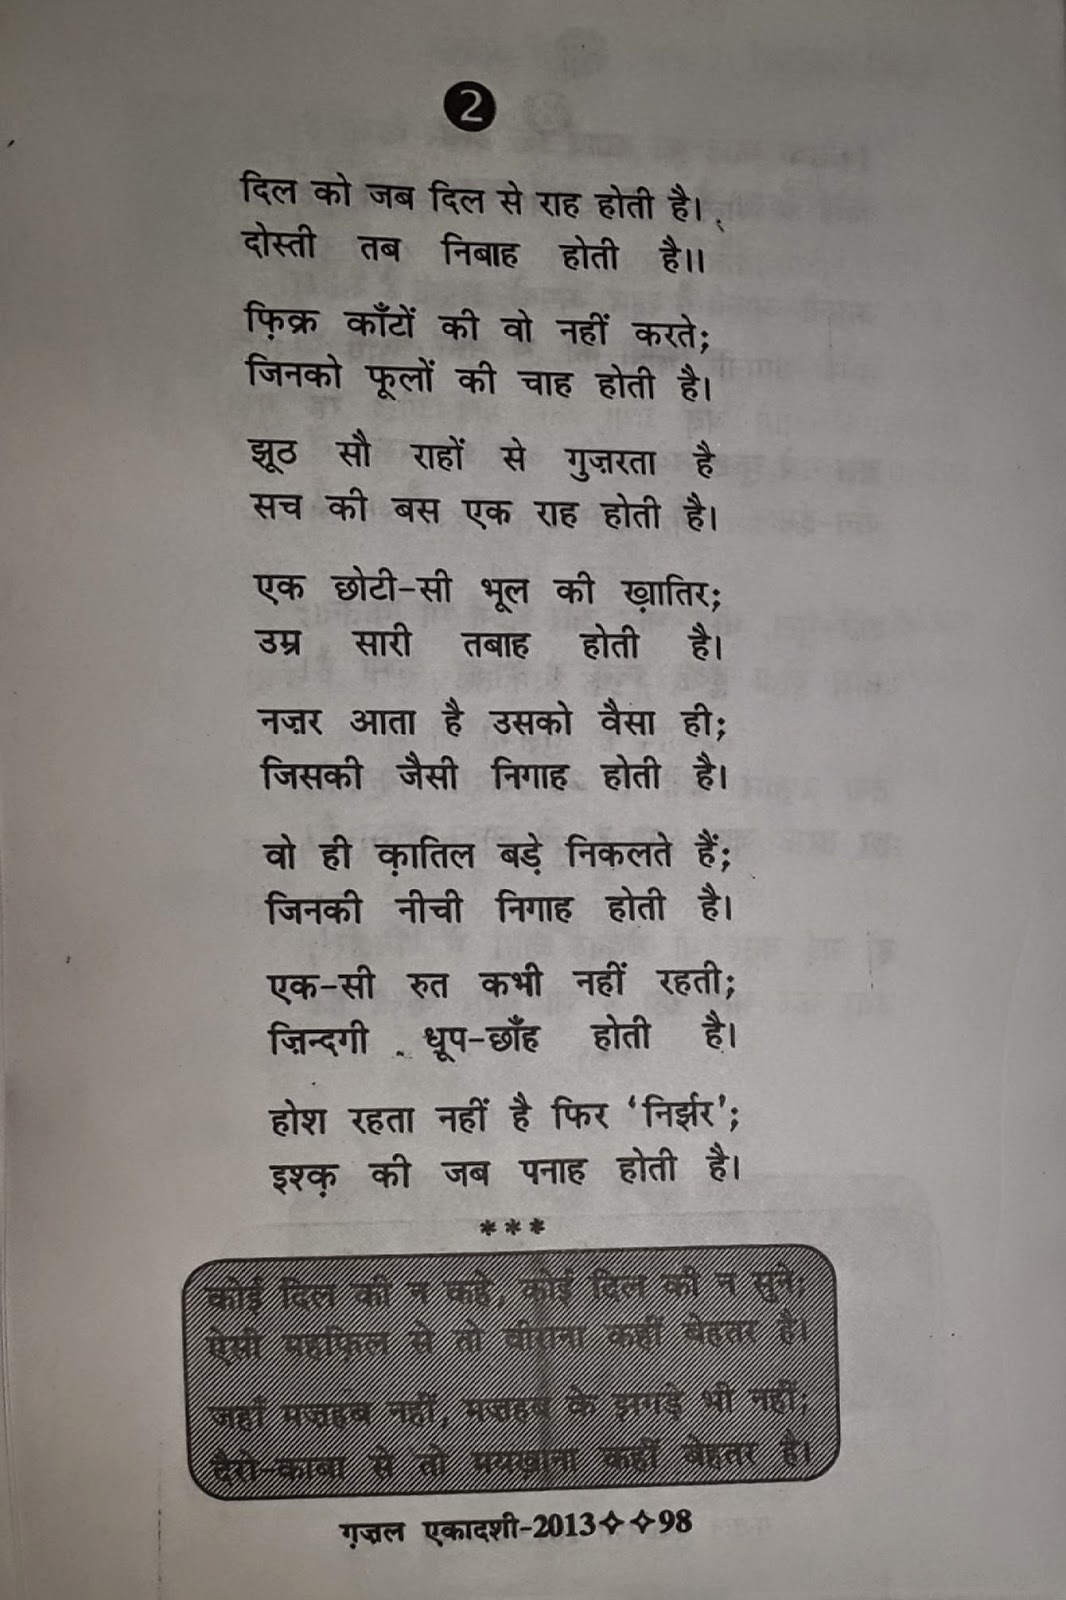 Ghazal koi dil ki na kahe koi dil ki na sune by Manoj 'Nirjhar' a famous urdu poet